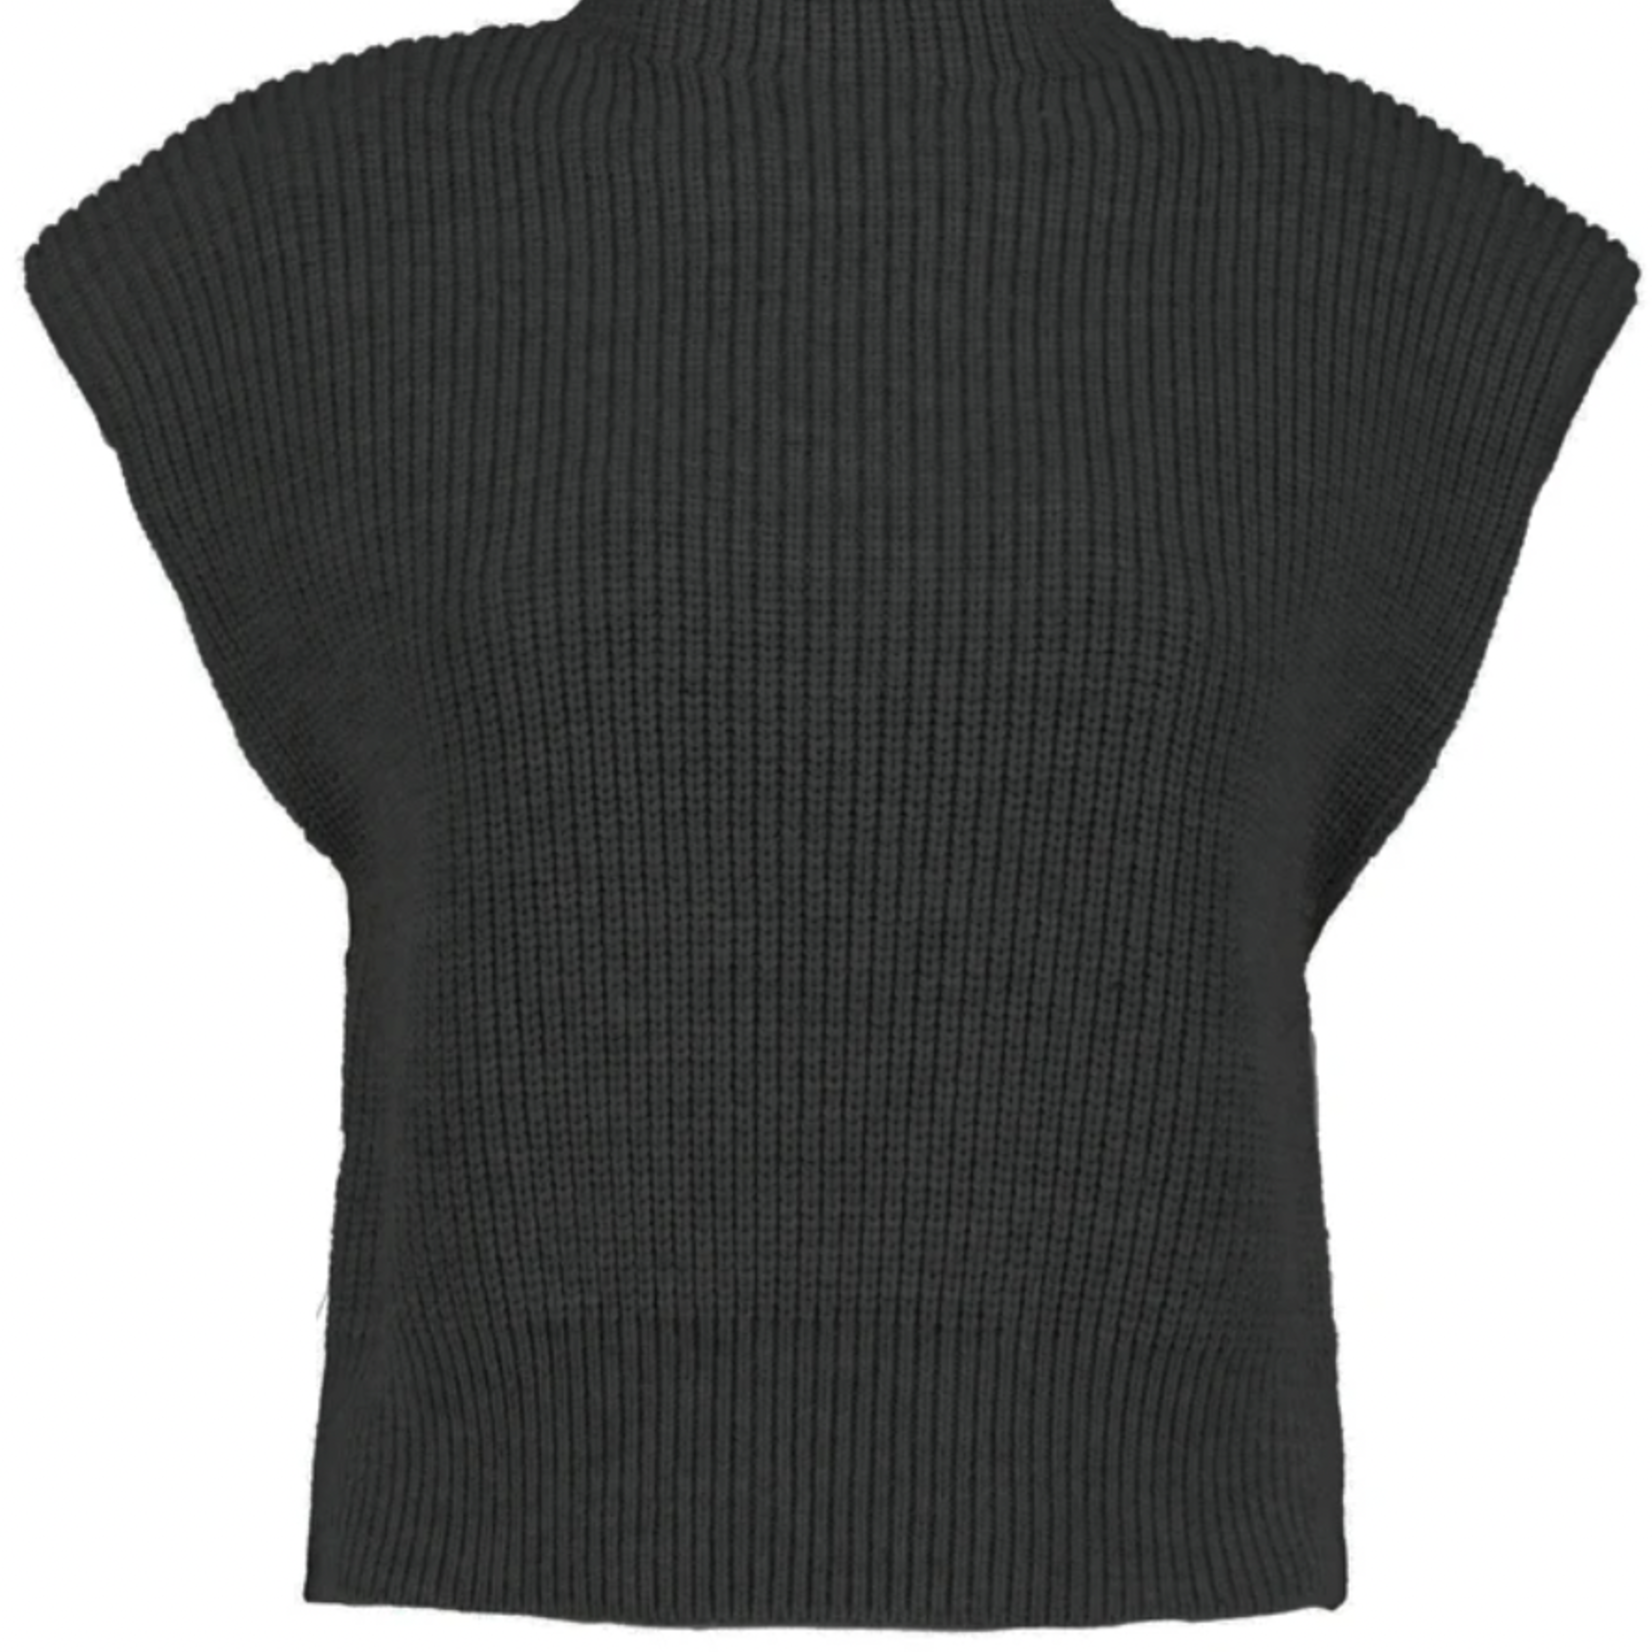 Max Shoulder Pad Sleeveless Sweater